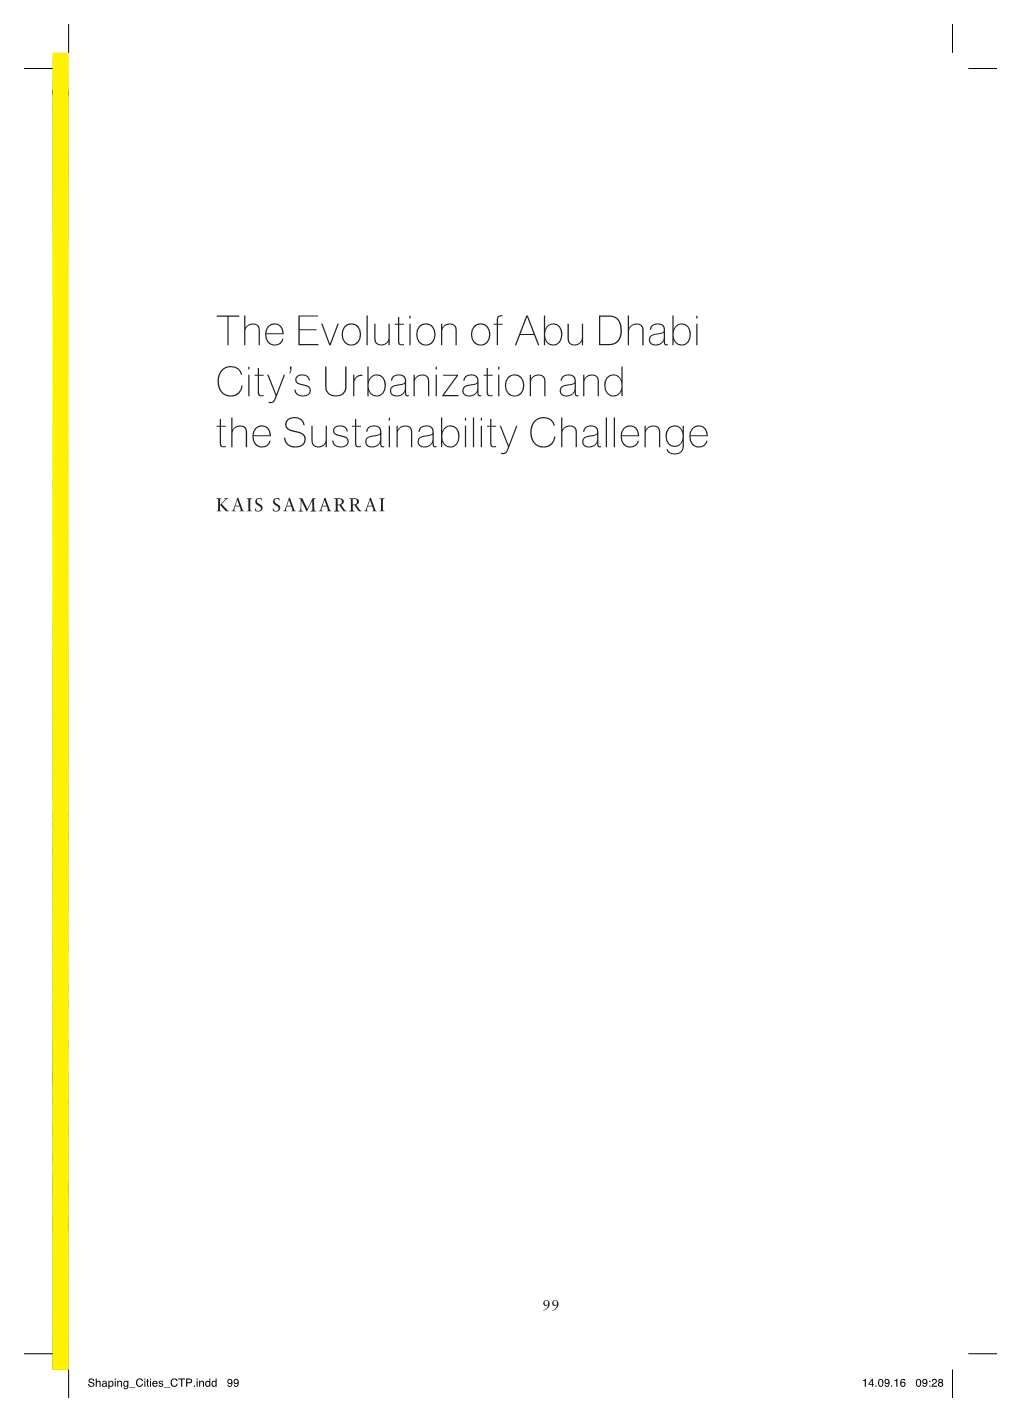 The Evolution of Abu Dhabi City's Urbanization and the Sustainability